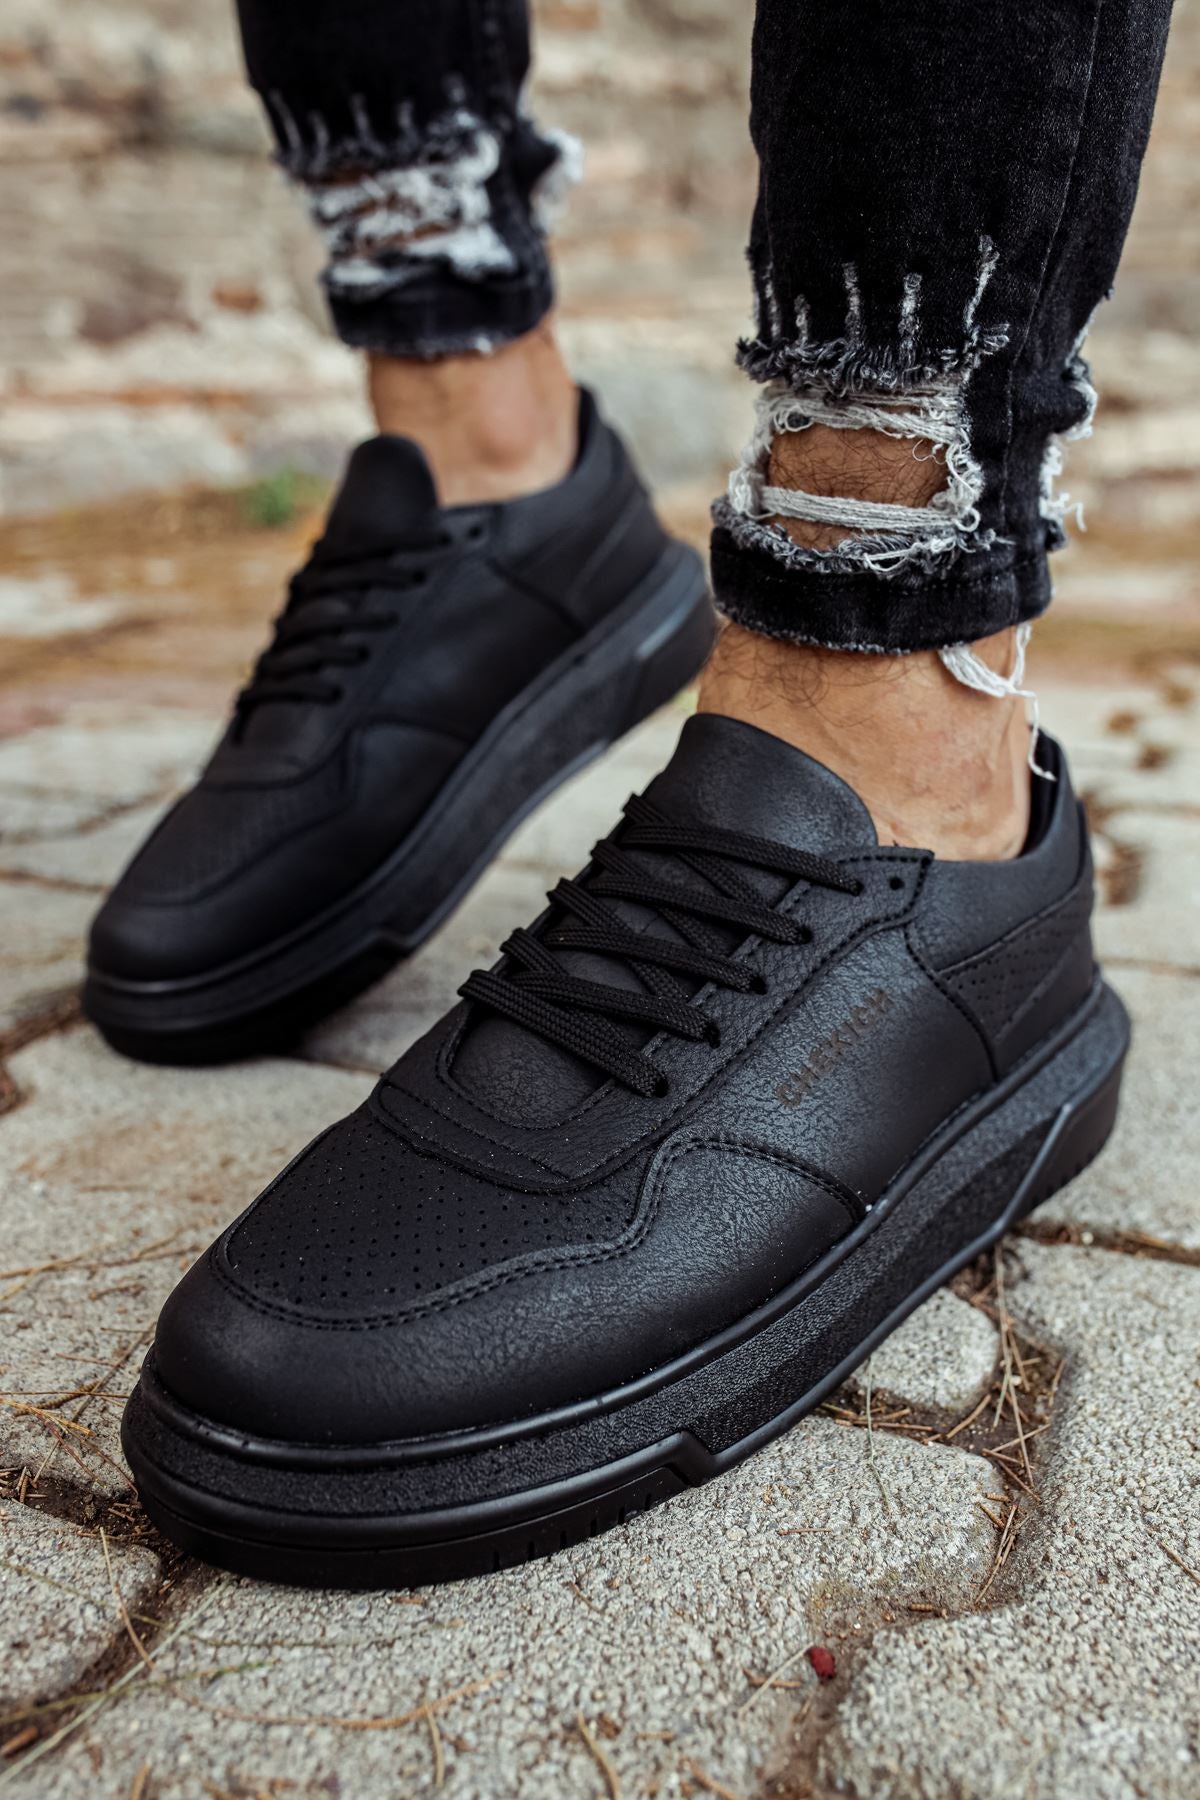 CH075 Black Sole Men's Unisex Sneaker Shoes - STREETMODE ™